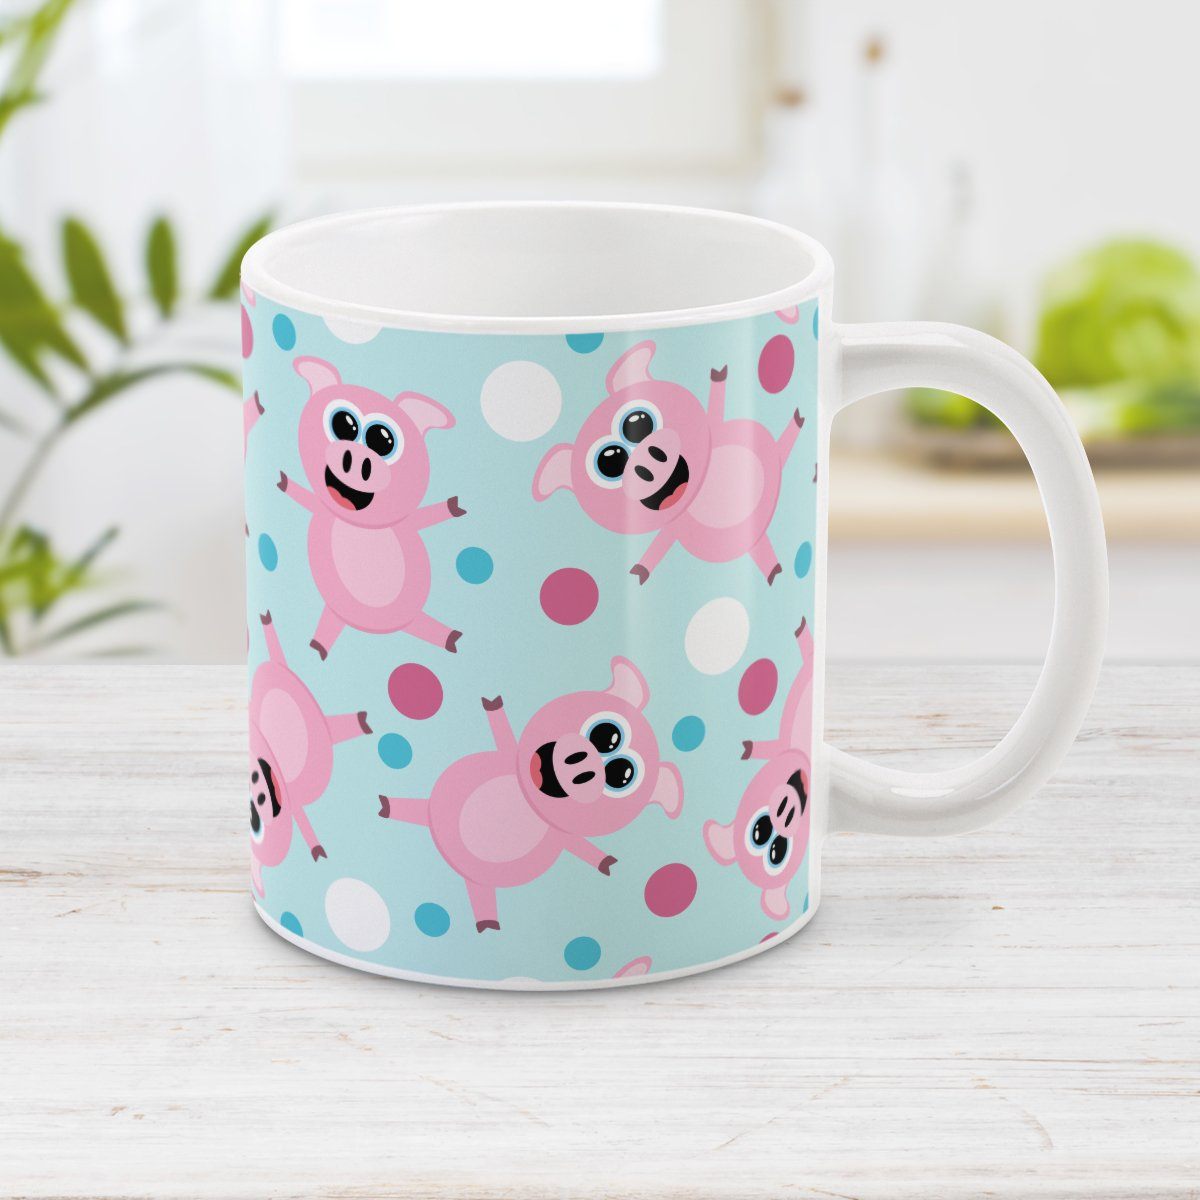 Pig Mug - Cute Cartoon Pig Pink and Blue Pattern - Pig Mug at Amy's Coffee Mugs